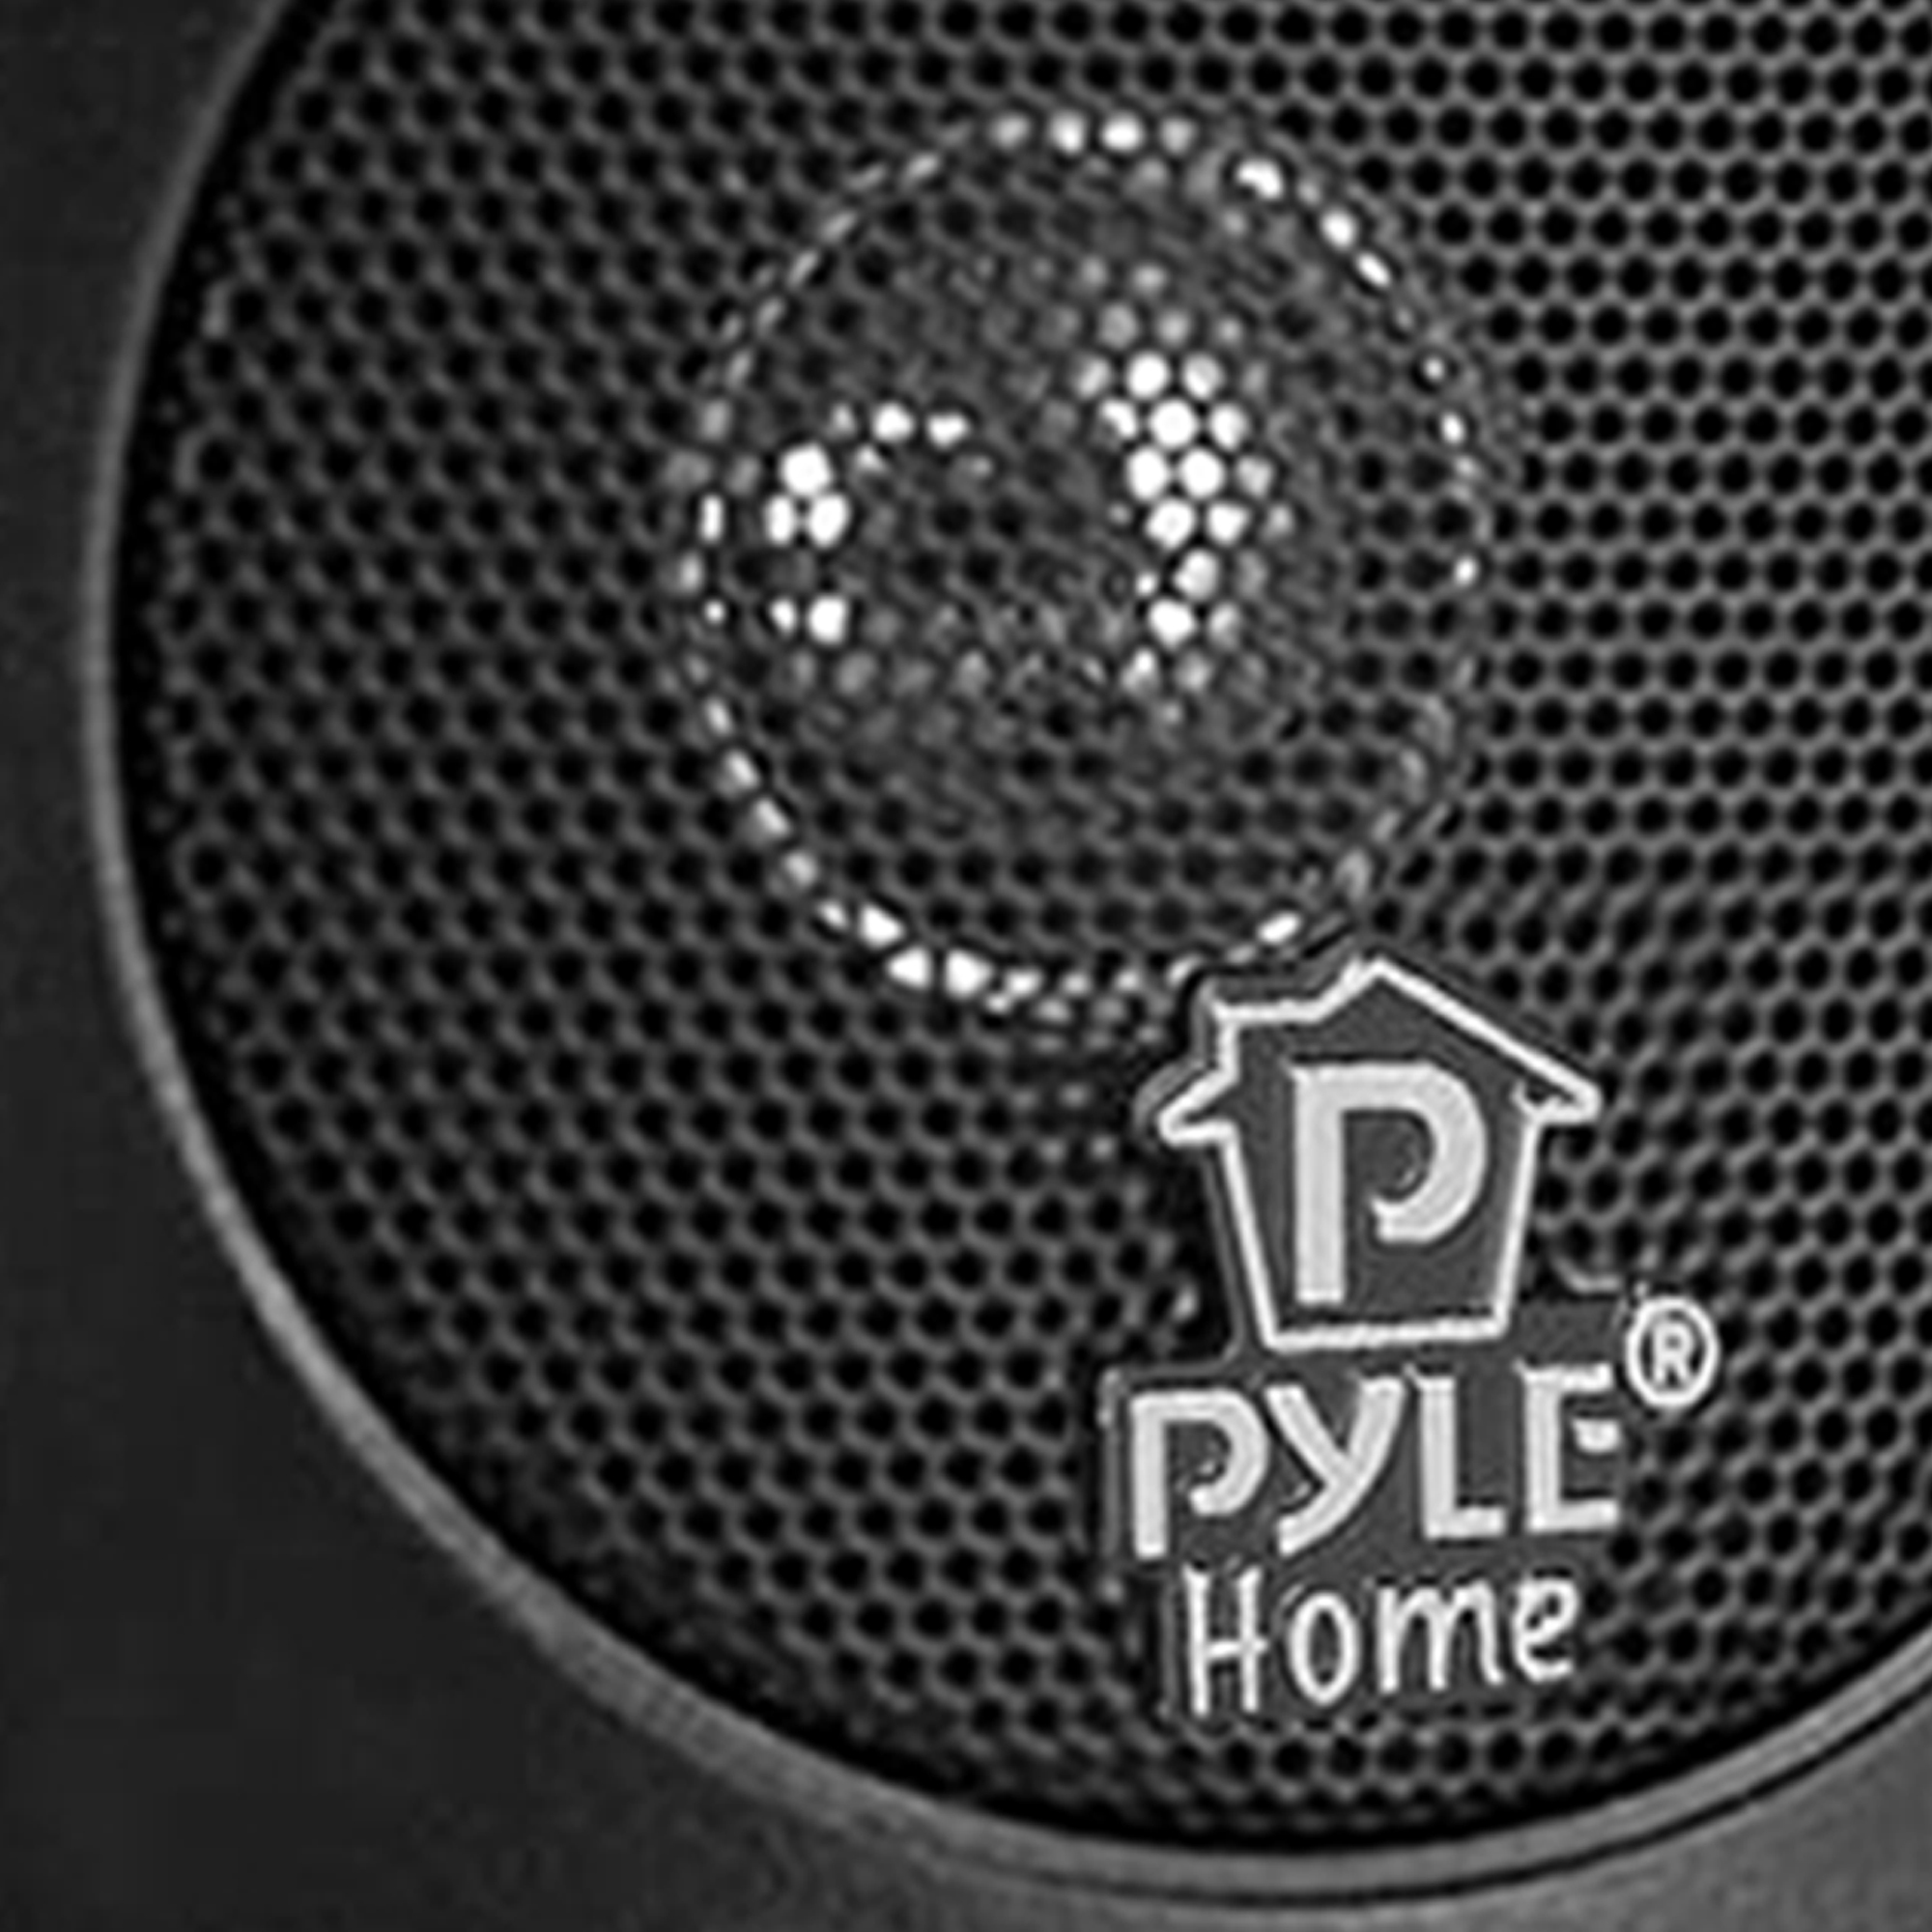 Pyle PCB3BK 3 Inch 100W Mini Cube Bookshelf Stereo Speakers, Black (4 Speakers) - image 4 of 5